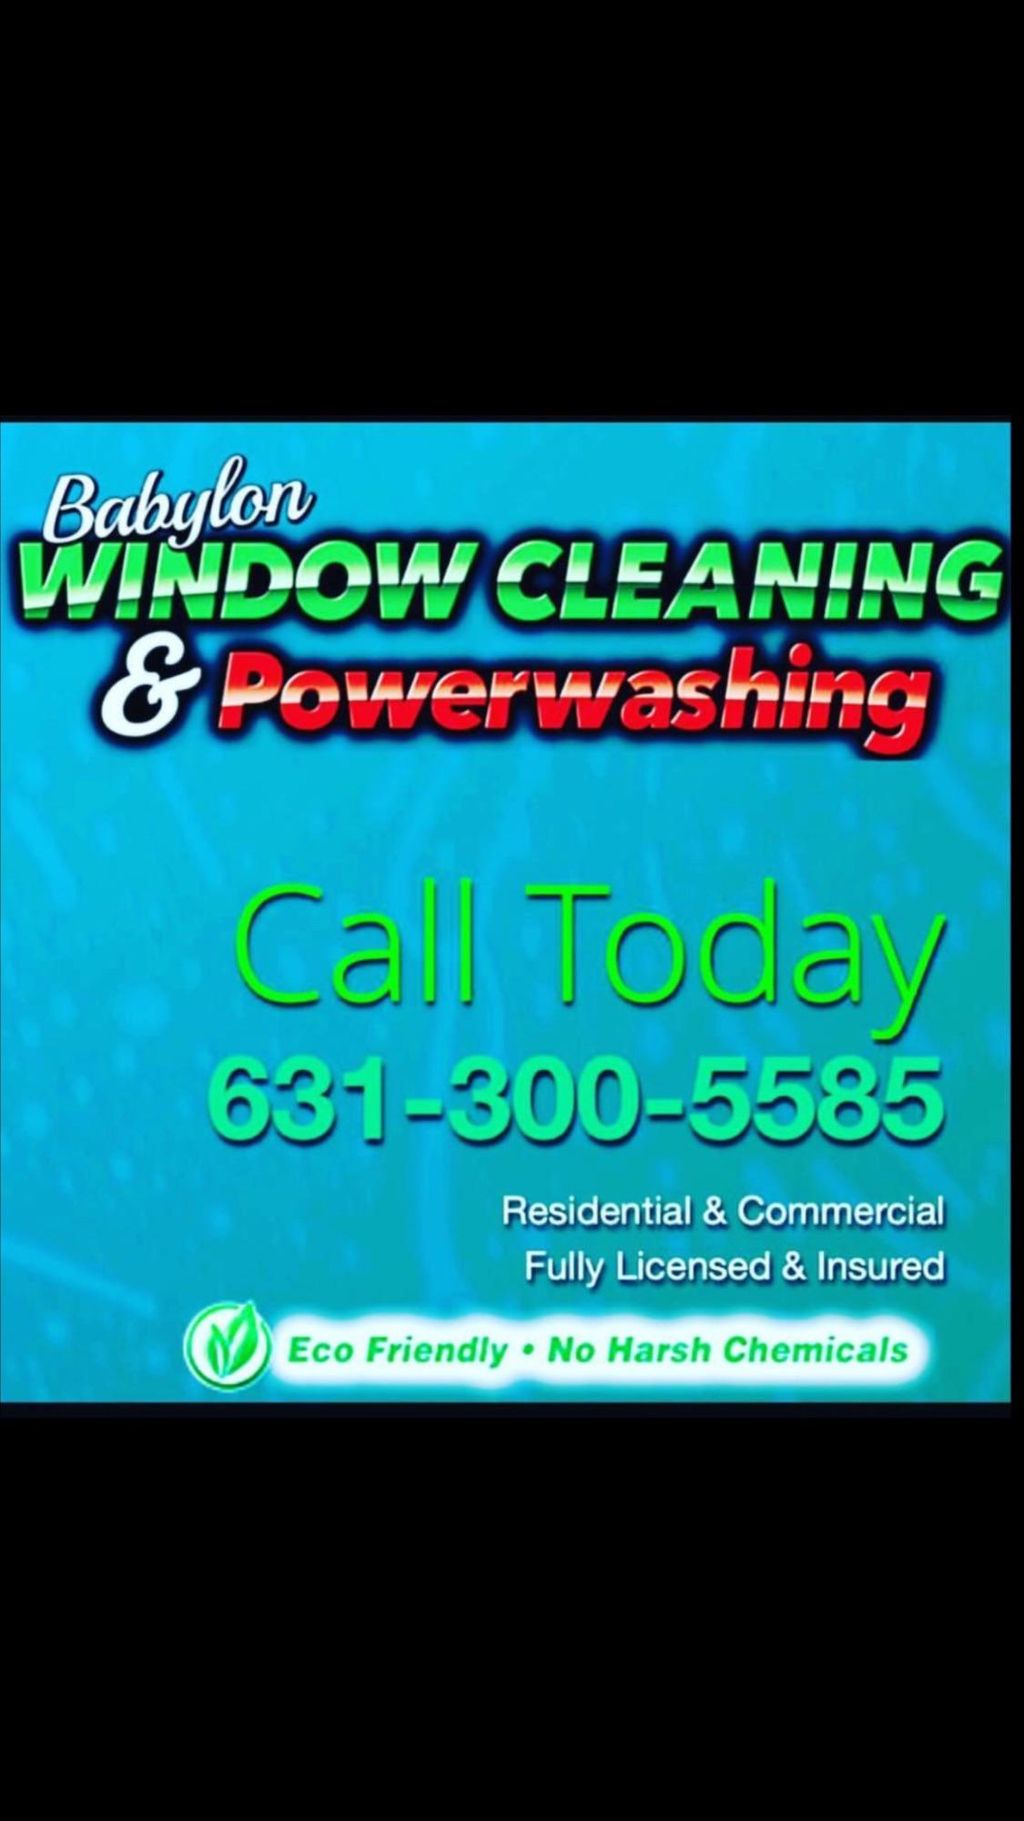 Babylon window cleaning power washing